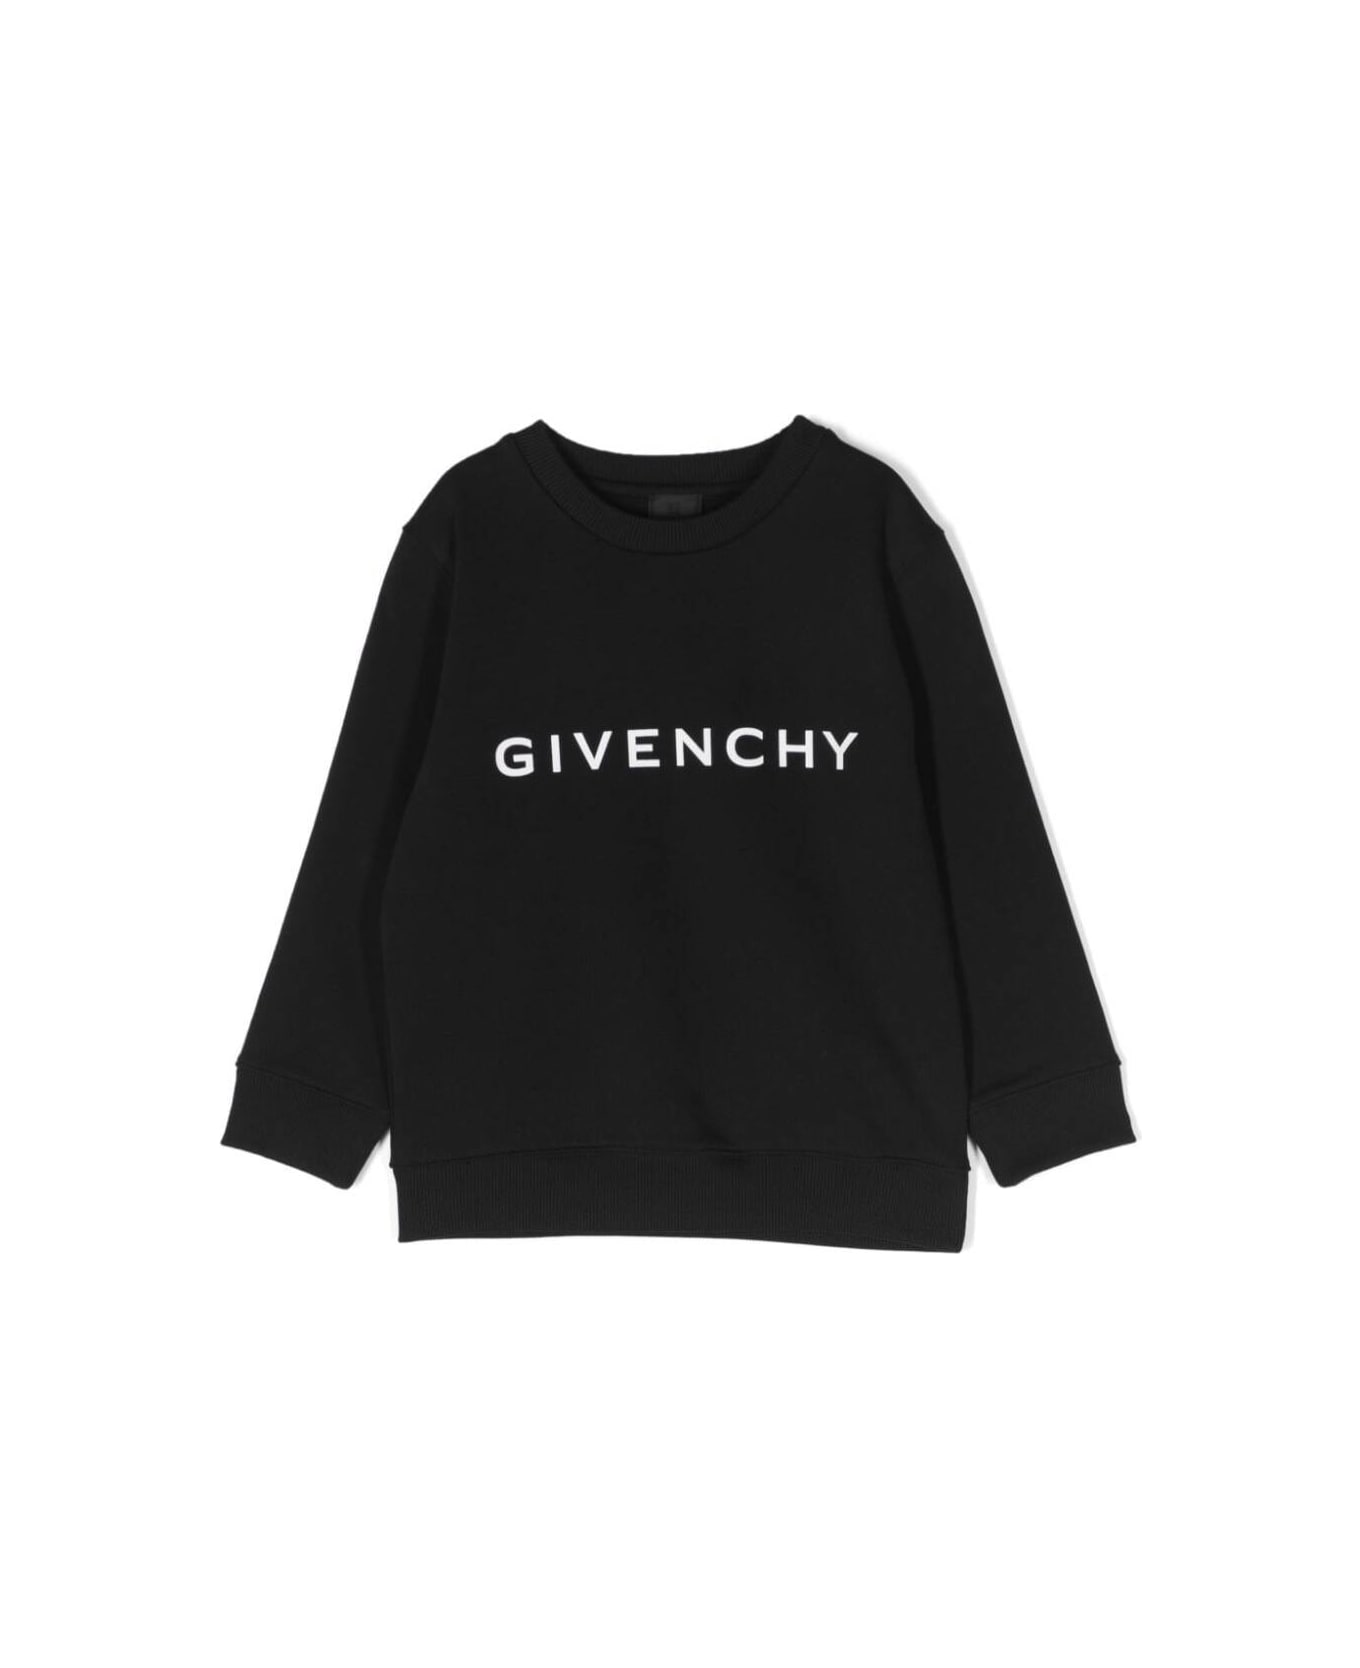 Givenchy H3014709b - B Nero